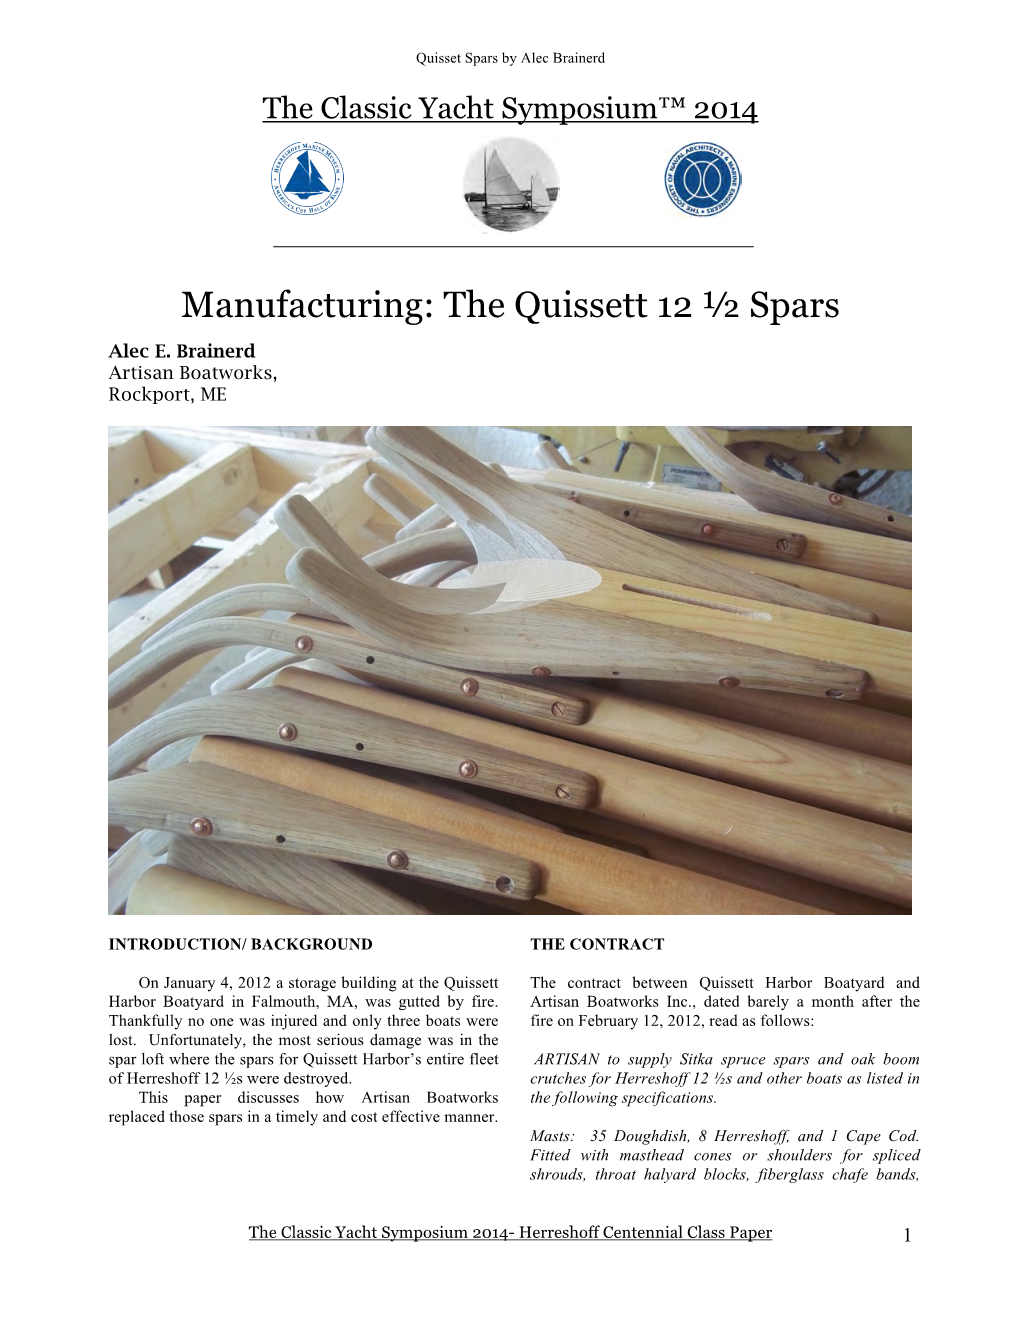 Manufacturing: the Quissett 12 ½ Spars